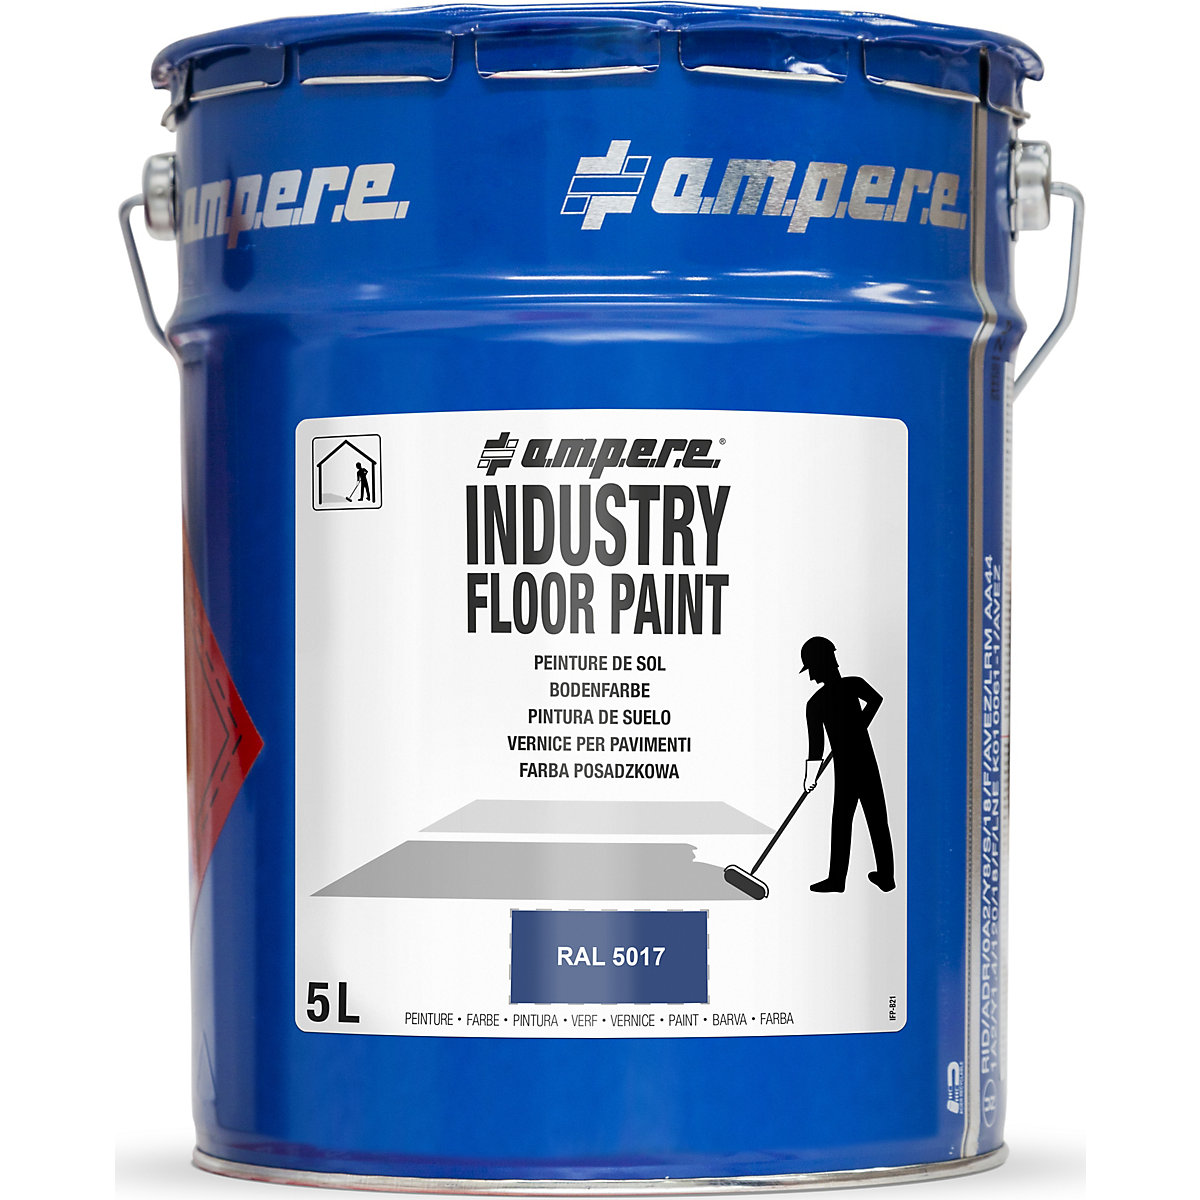 Peinture de marquage des sols Industry Floor Paint® - Ampere